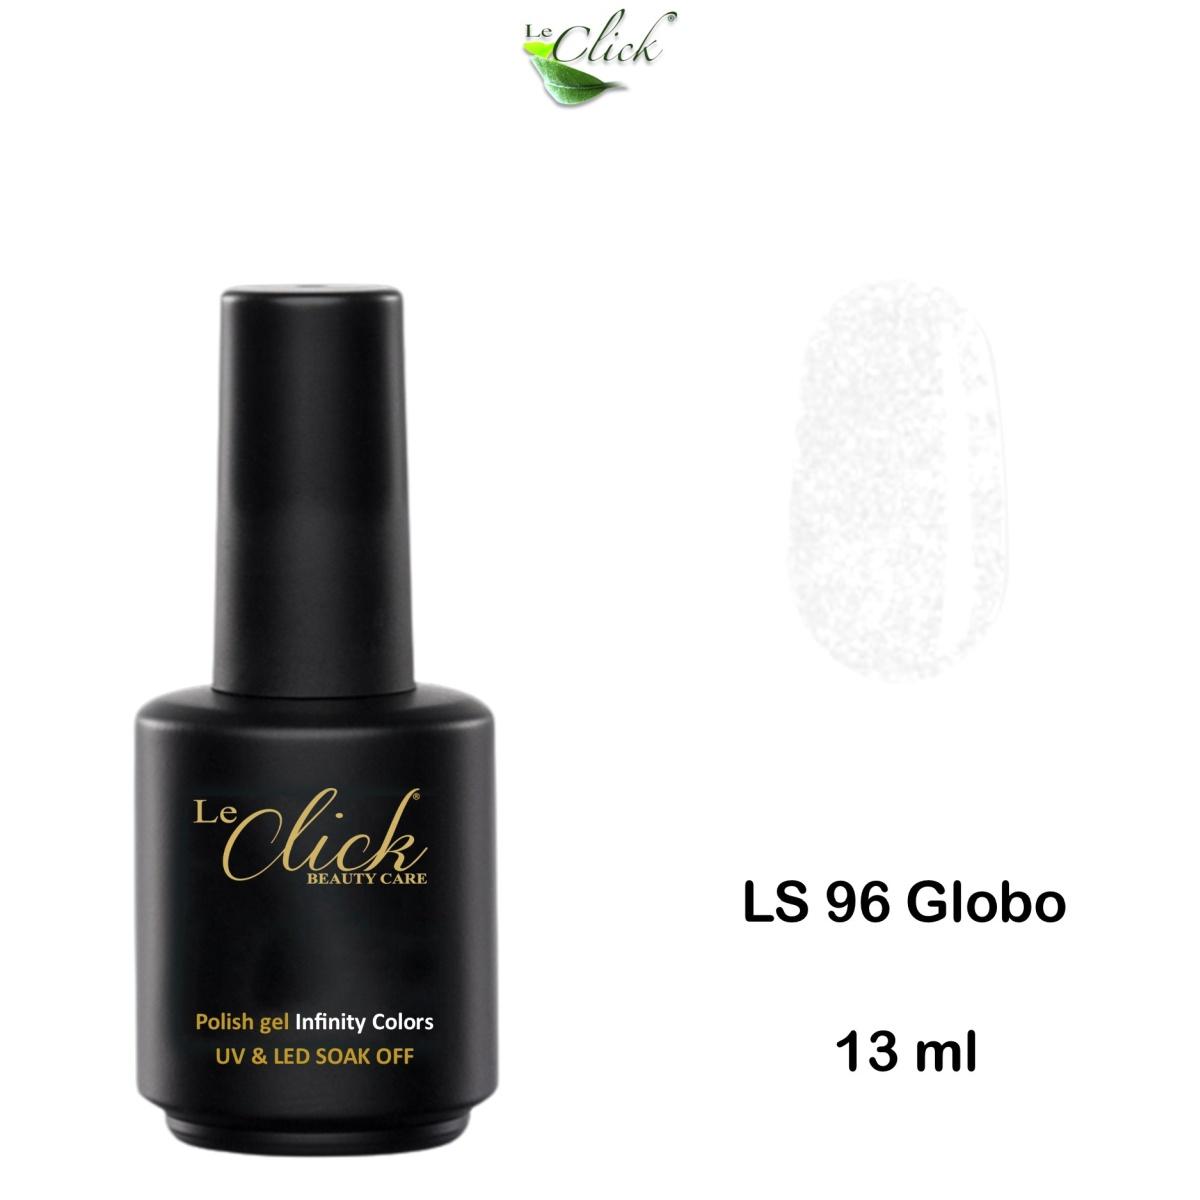 Le click Polish Gel Infinity ( LS-96 ) Globo 13 ml